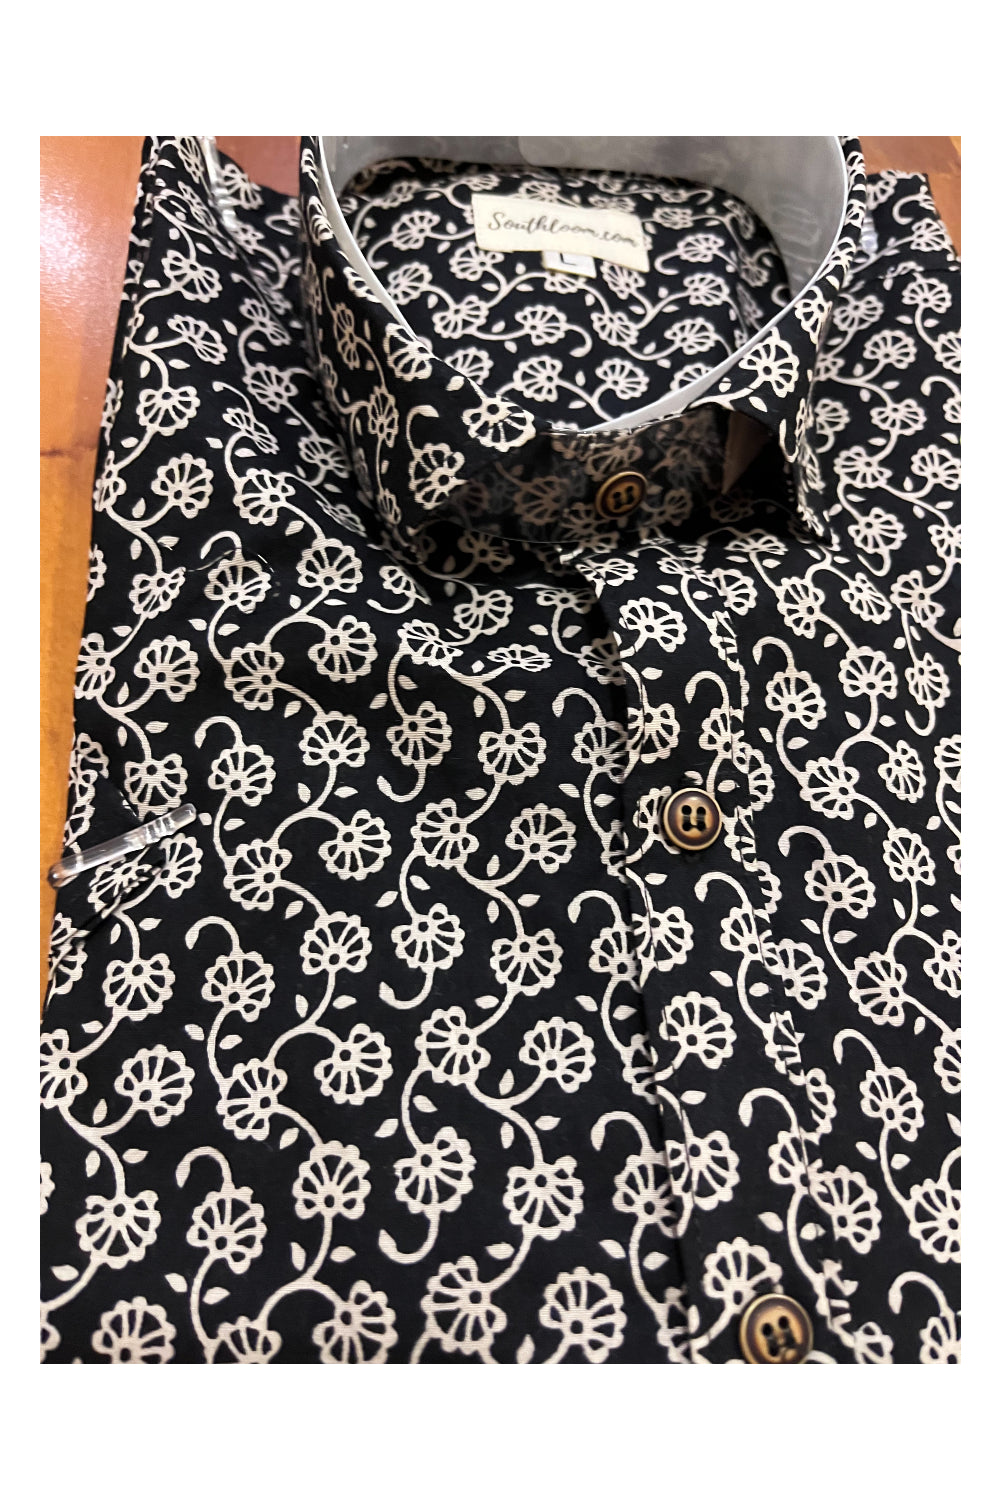 Southloom Jaipur Cotton Black Floral Hand Block Printed Shirt (Half Sleeves)